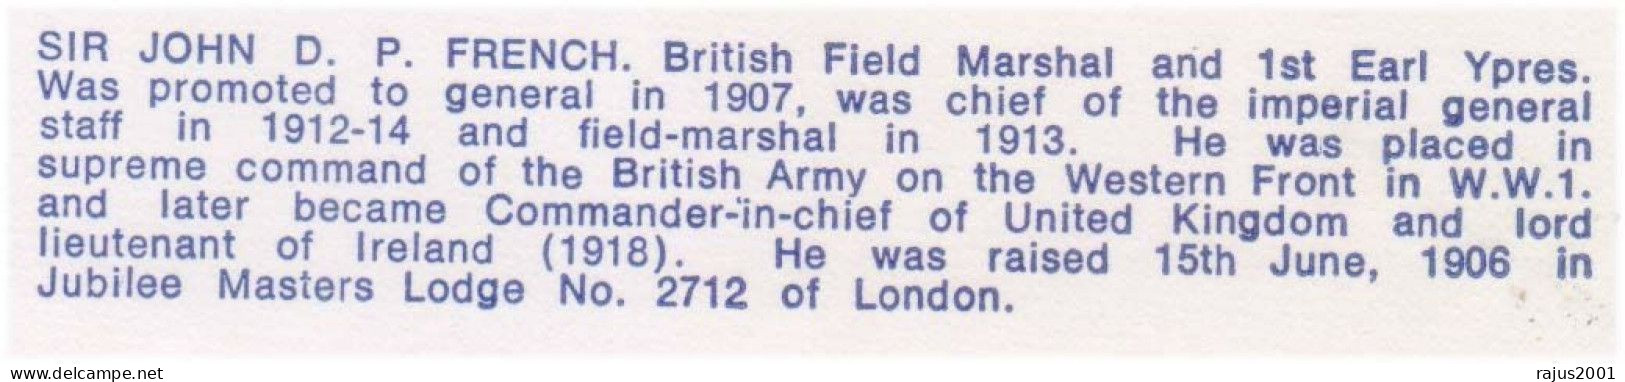 Sir John D.P. French Field Marshal, Masters Lodge No. 2712, British Army Mason, Masonic Freemasonry Limited Edition FDC - Freimaurerei